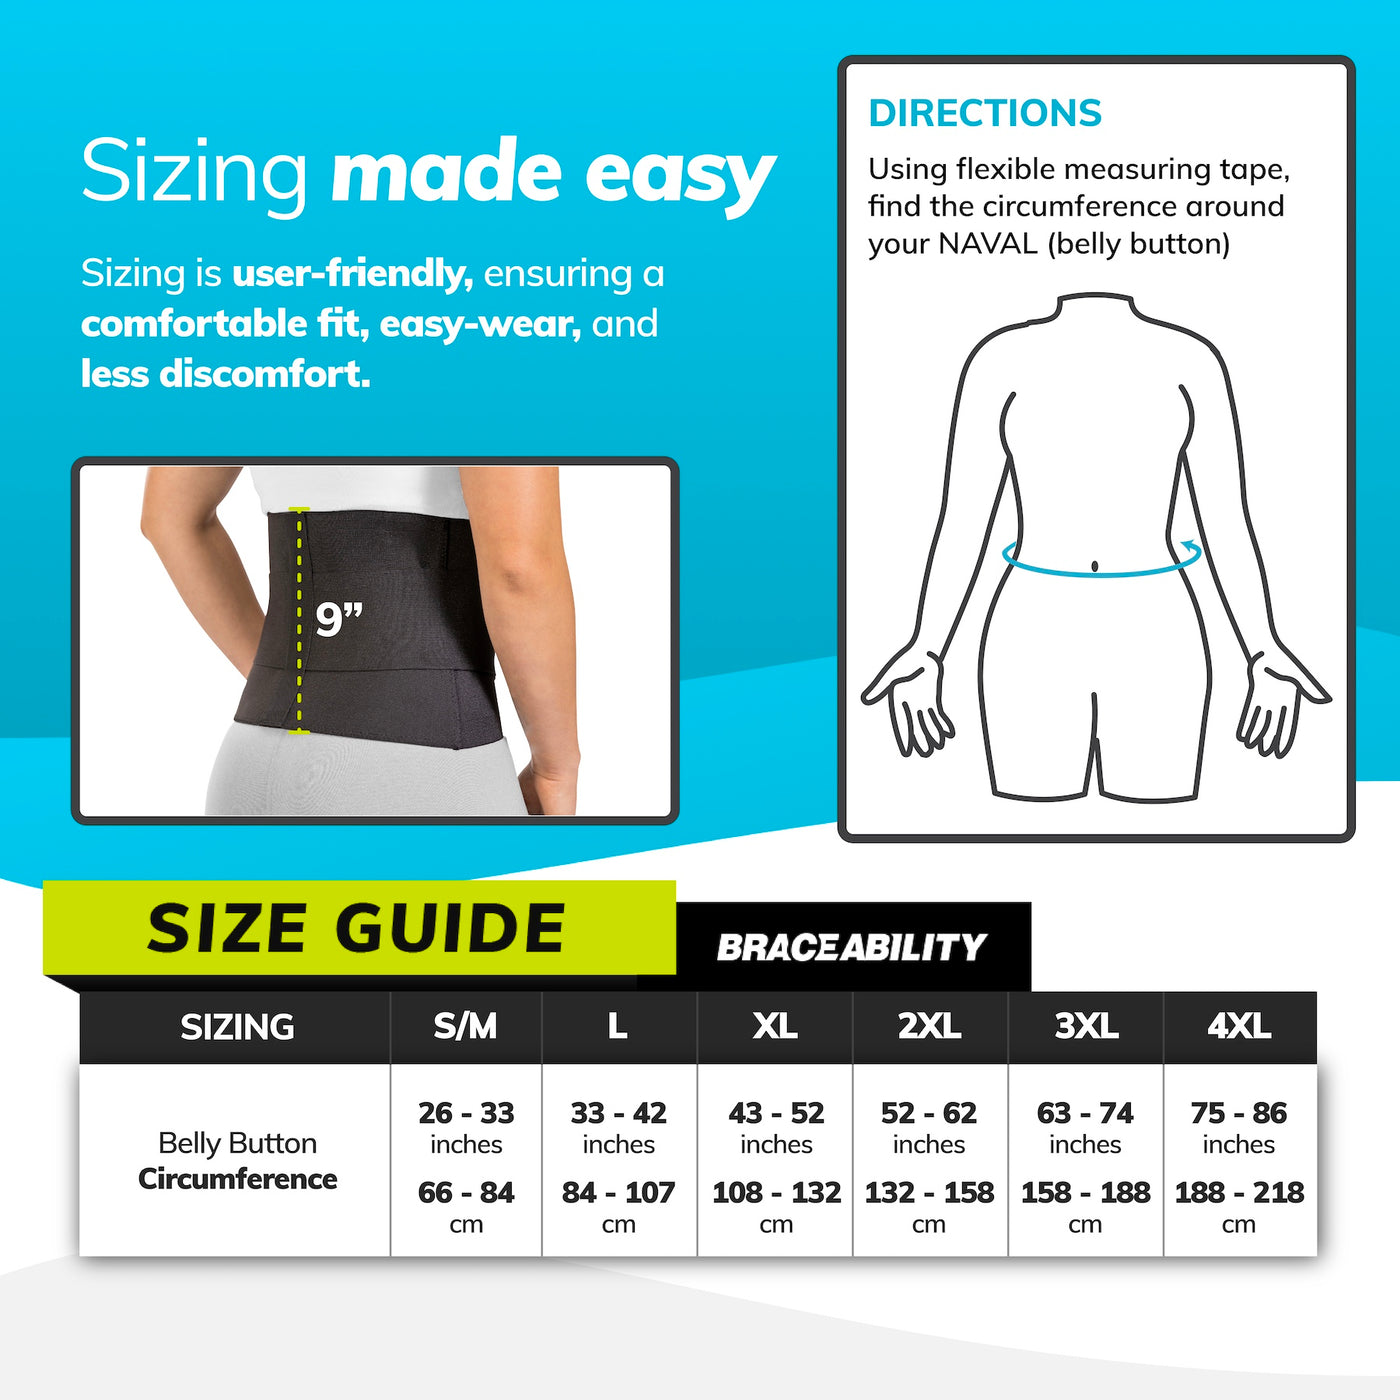 Unisex Fitness Groin Brace Hip Pain Relief Devices Back Brace